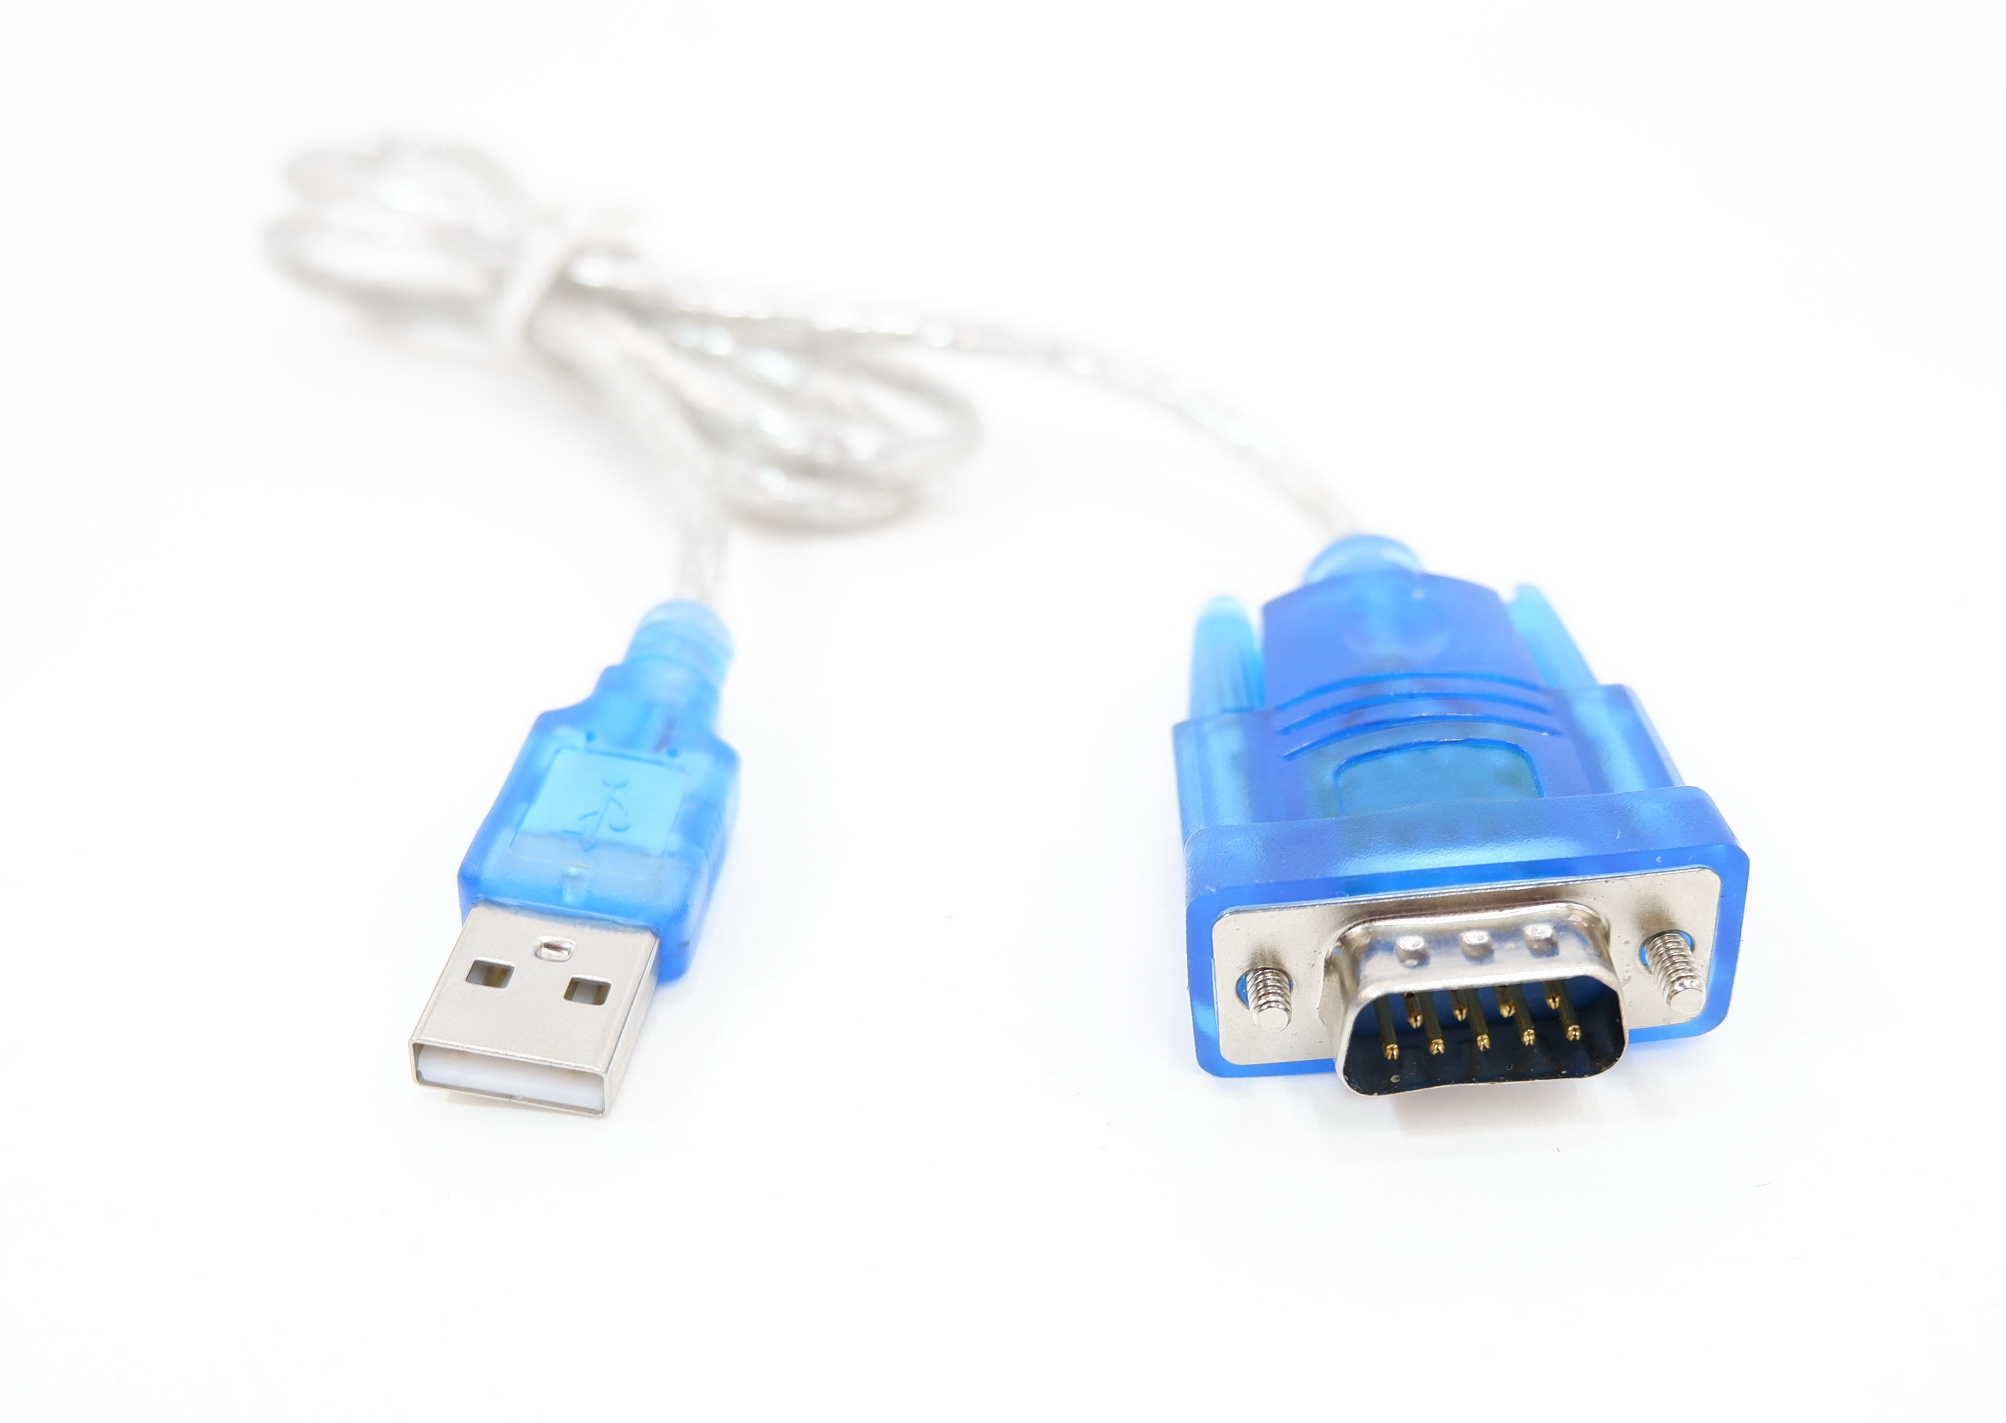 Конвертер USB rs232. Болид USB-rs232. Переходник com(rs232) - USB. USB 232 bolid.